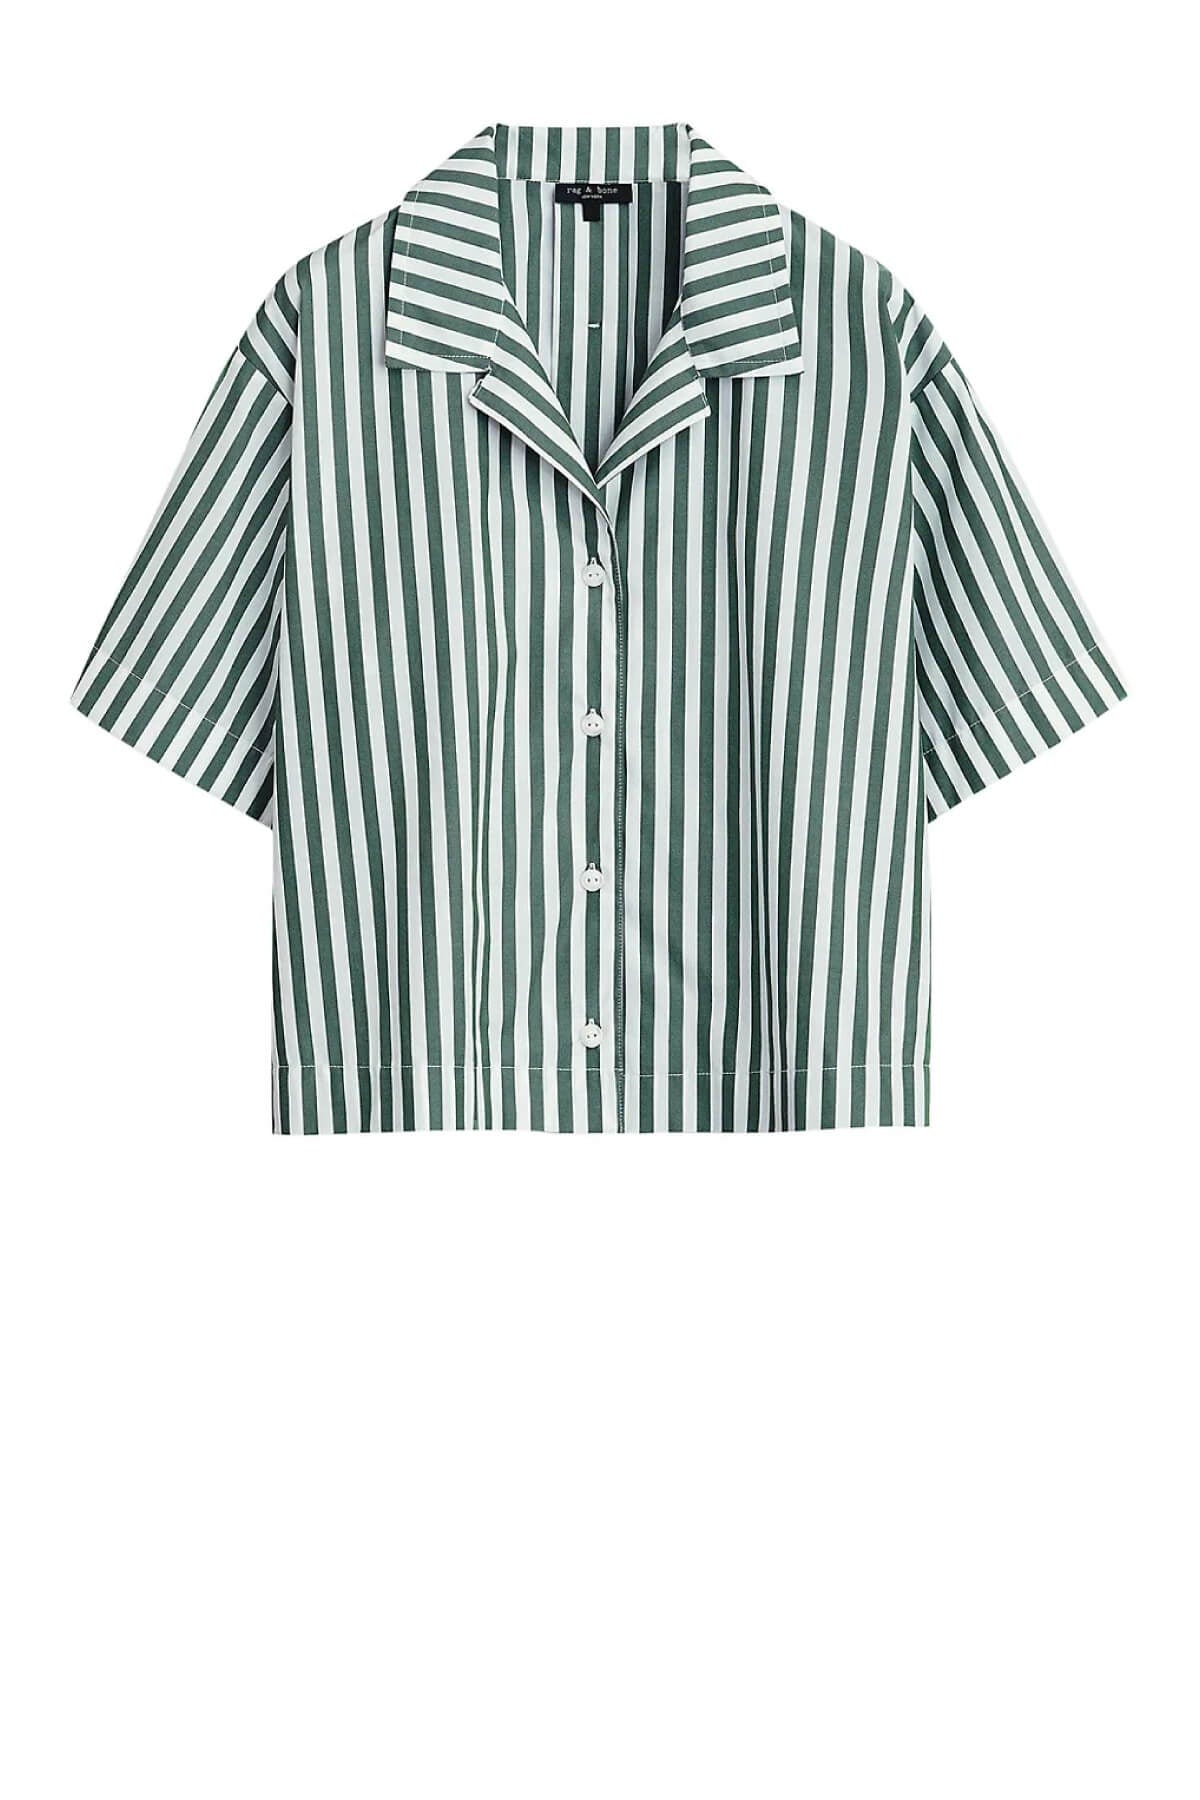 Rag & Bone Reed Striped Shirt - Green Stripe